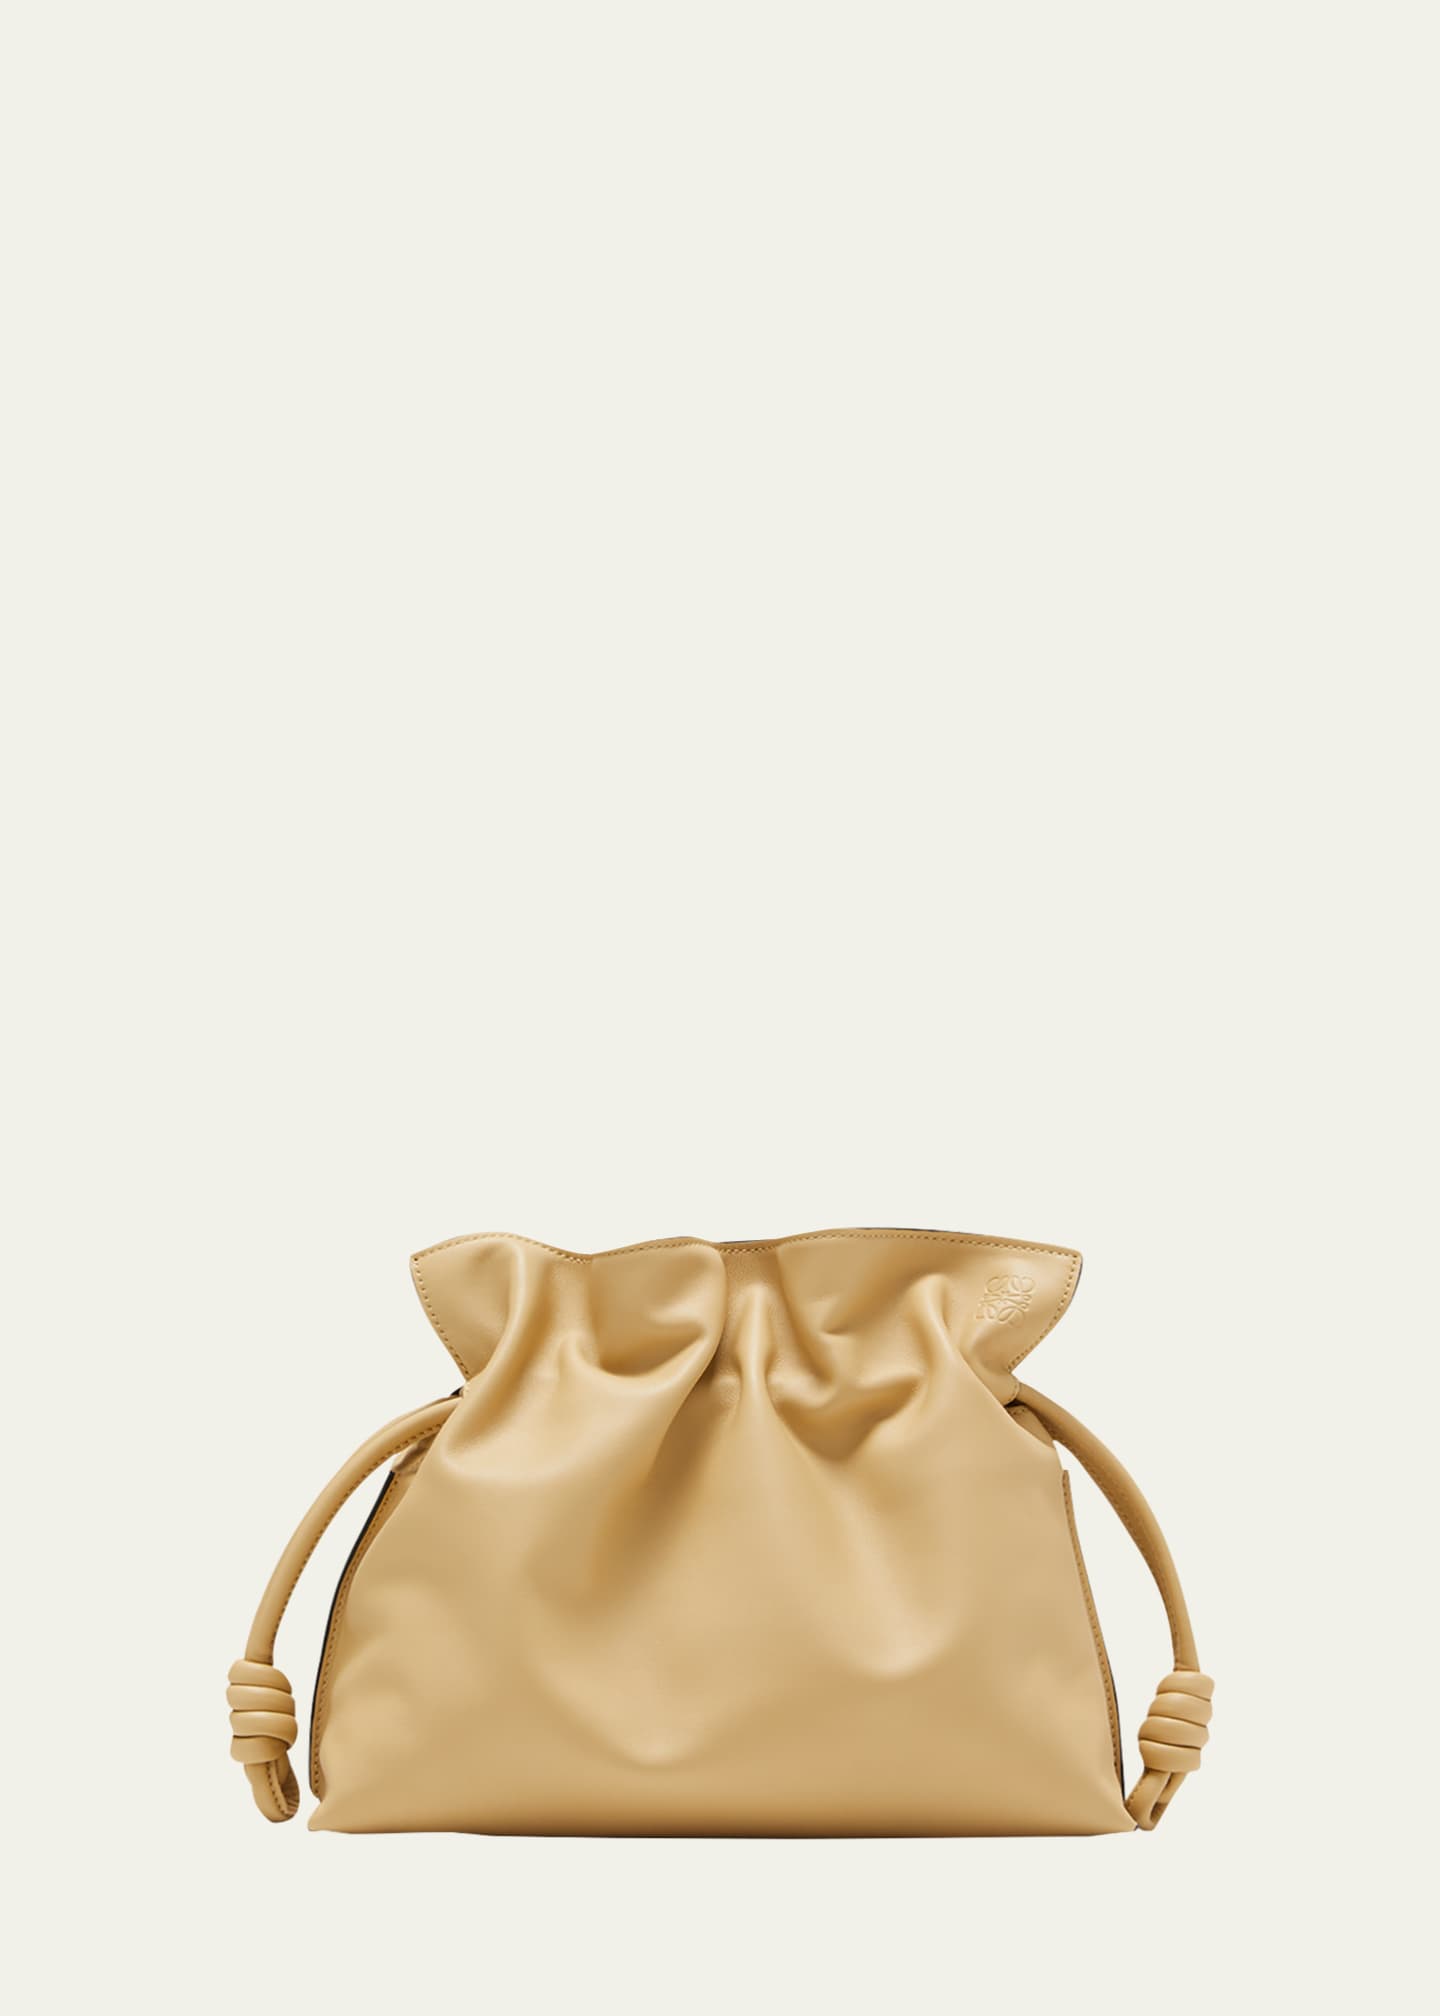 Loewe Flamenco Clutch Bag in Napa Leather with Blind Embossed Anagram | Bergdorf Goodman